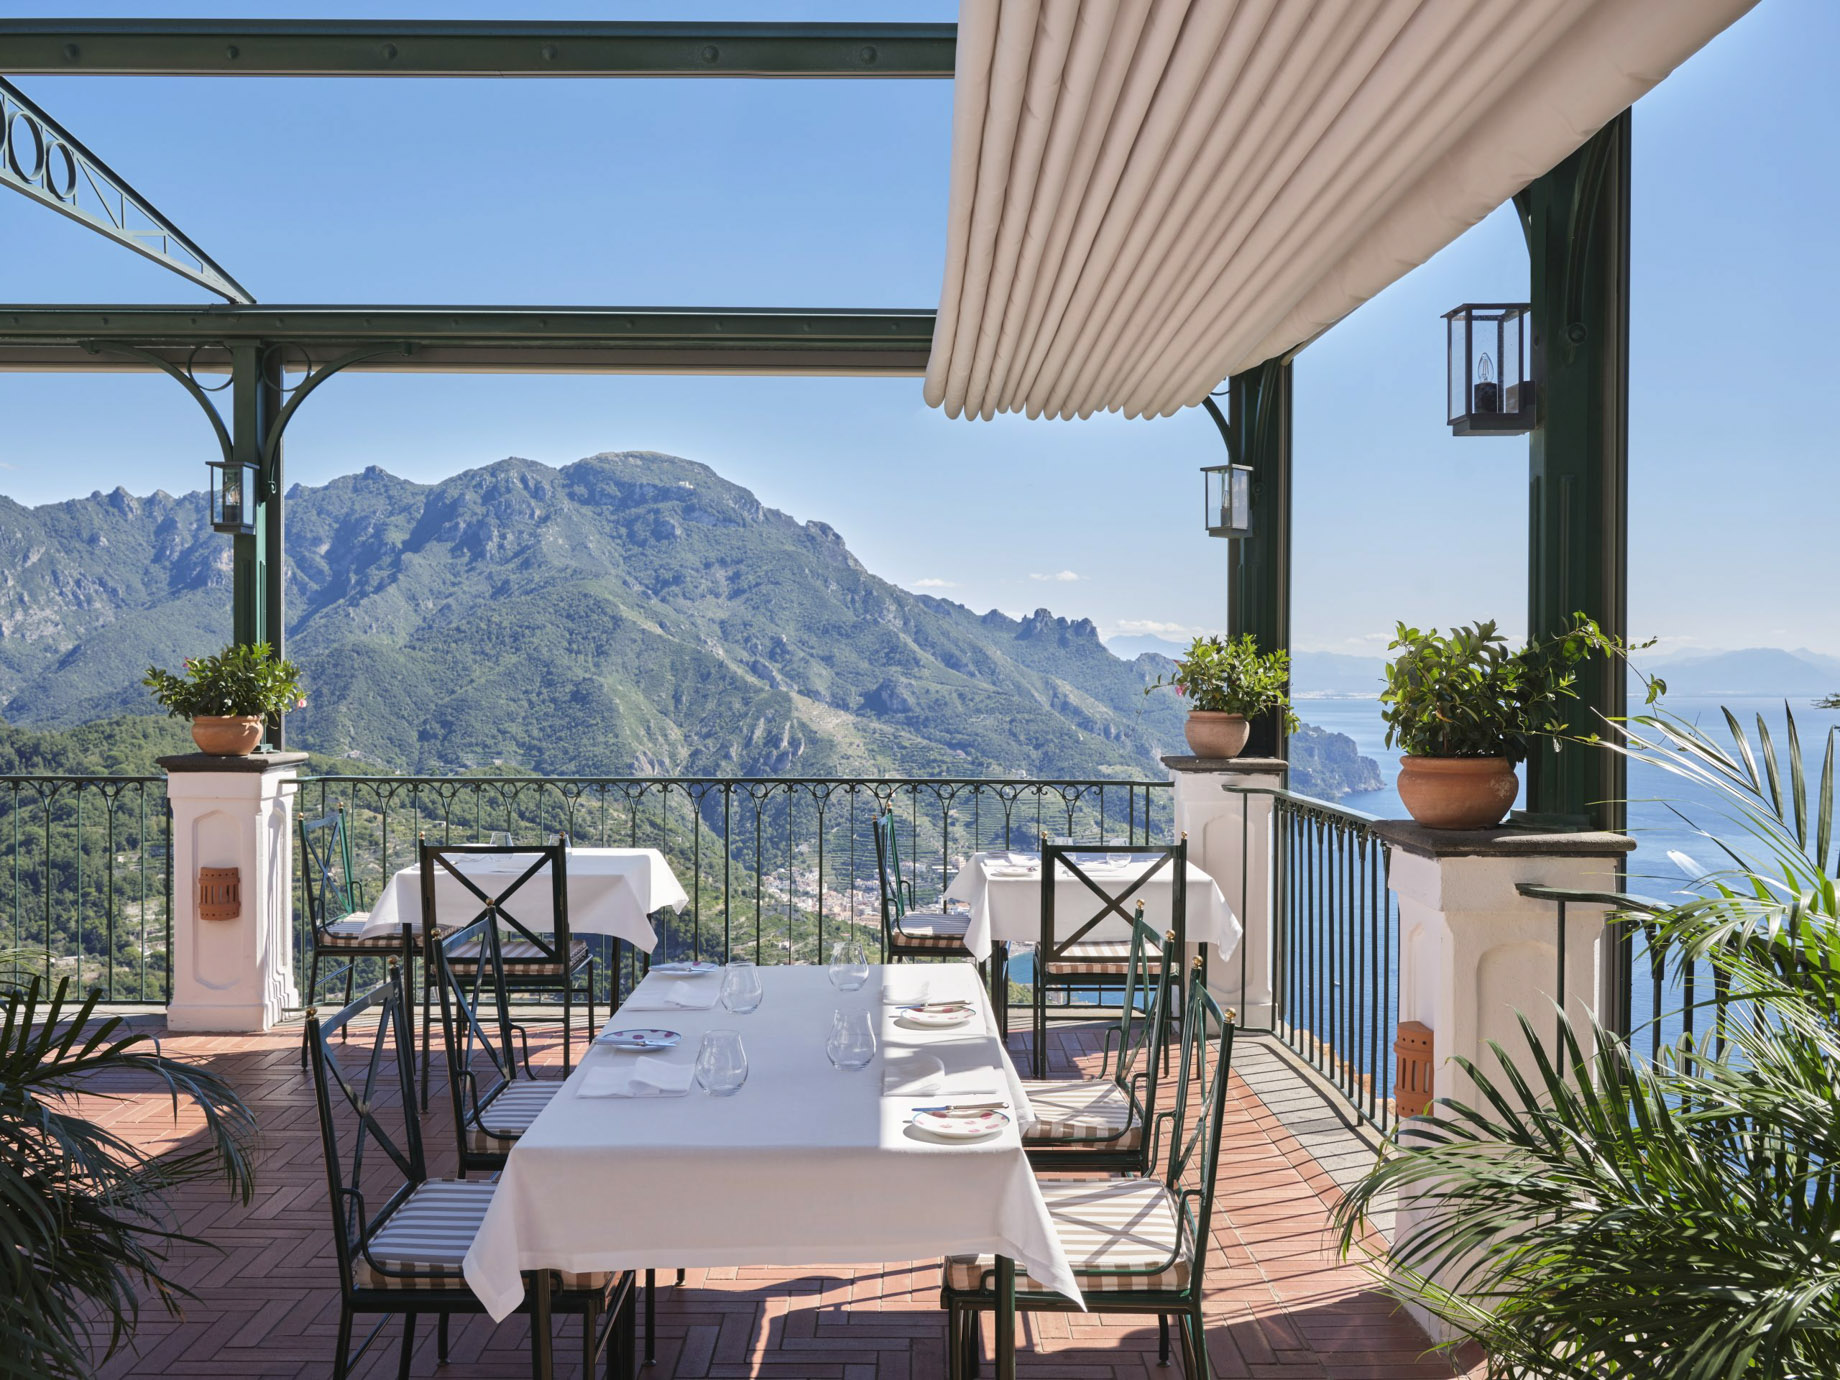 Palazzo Avino Hotel – Amalfi Coast, Ravello, Italy – Terrazza Belvedere Restaurant